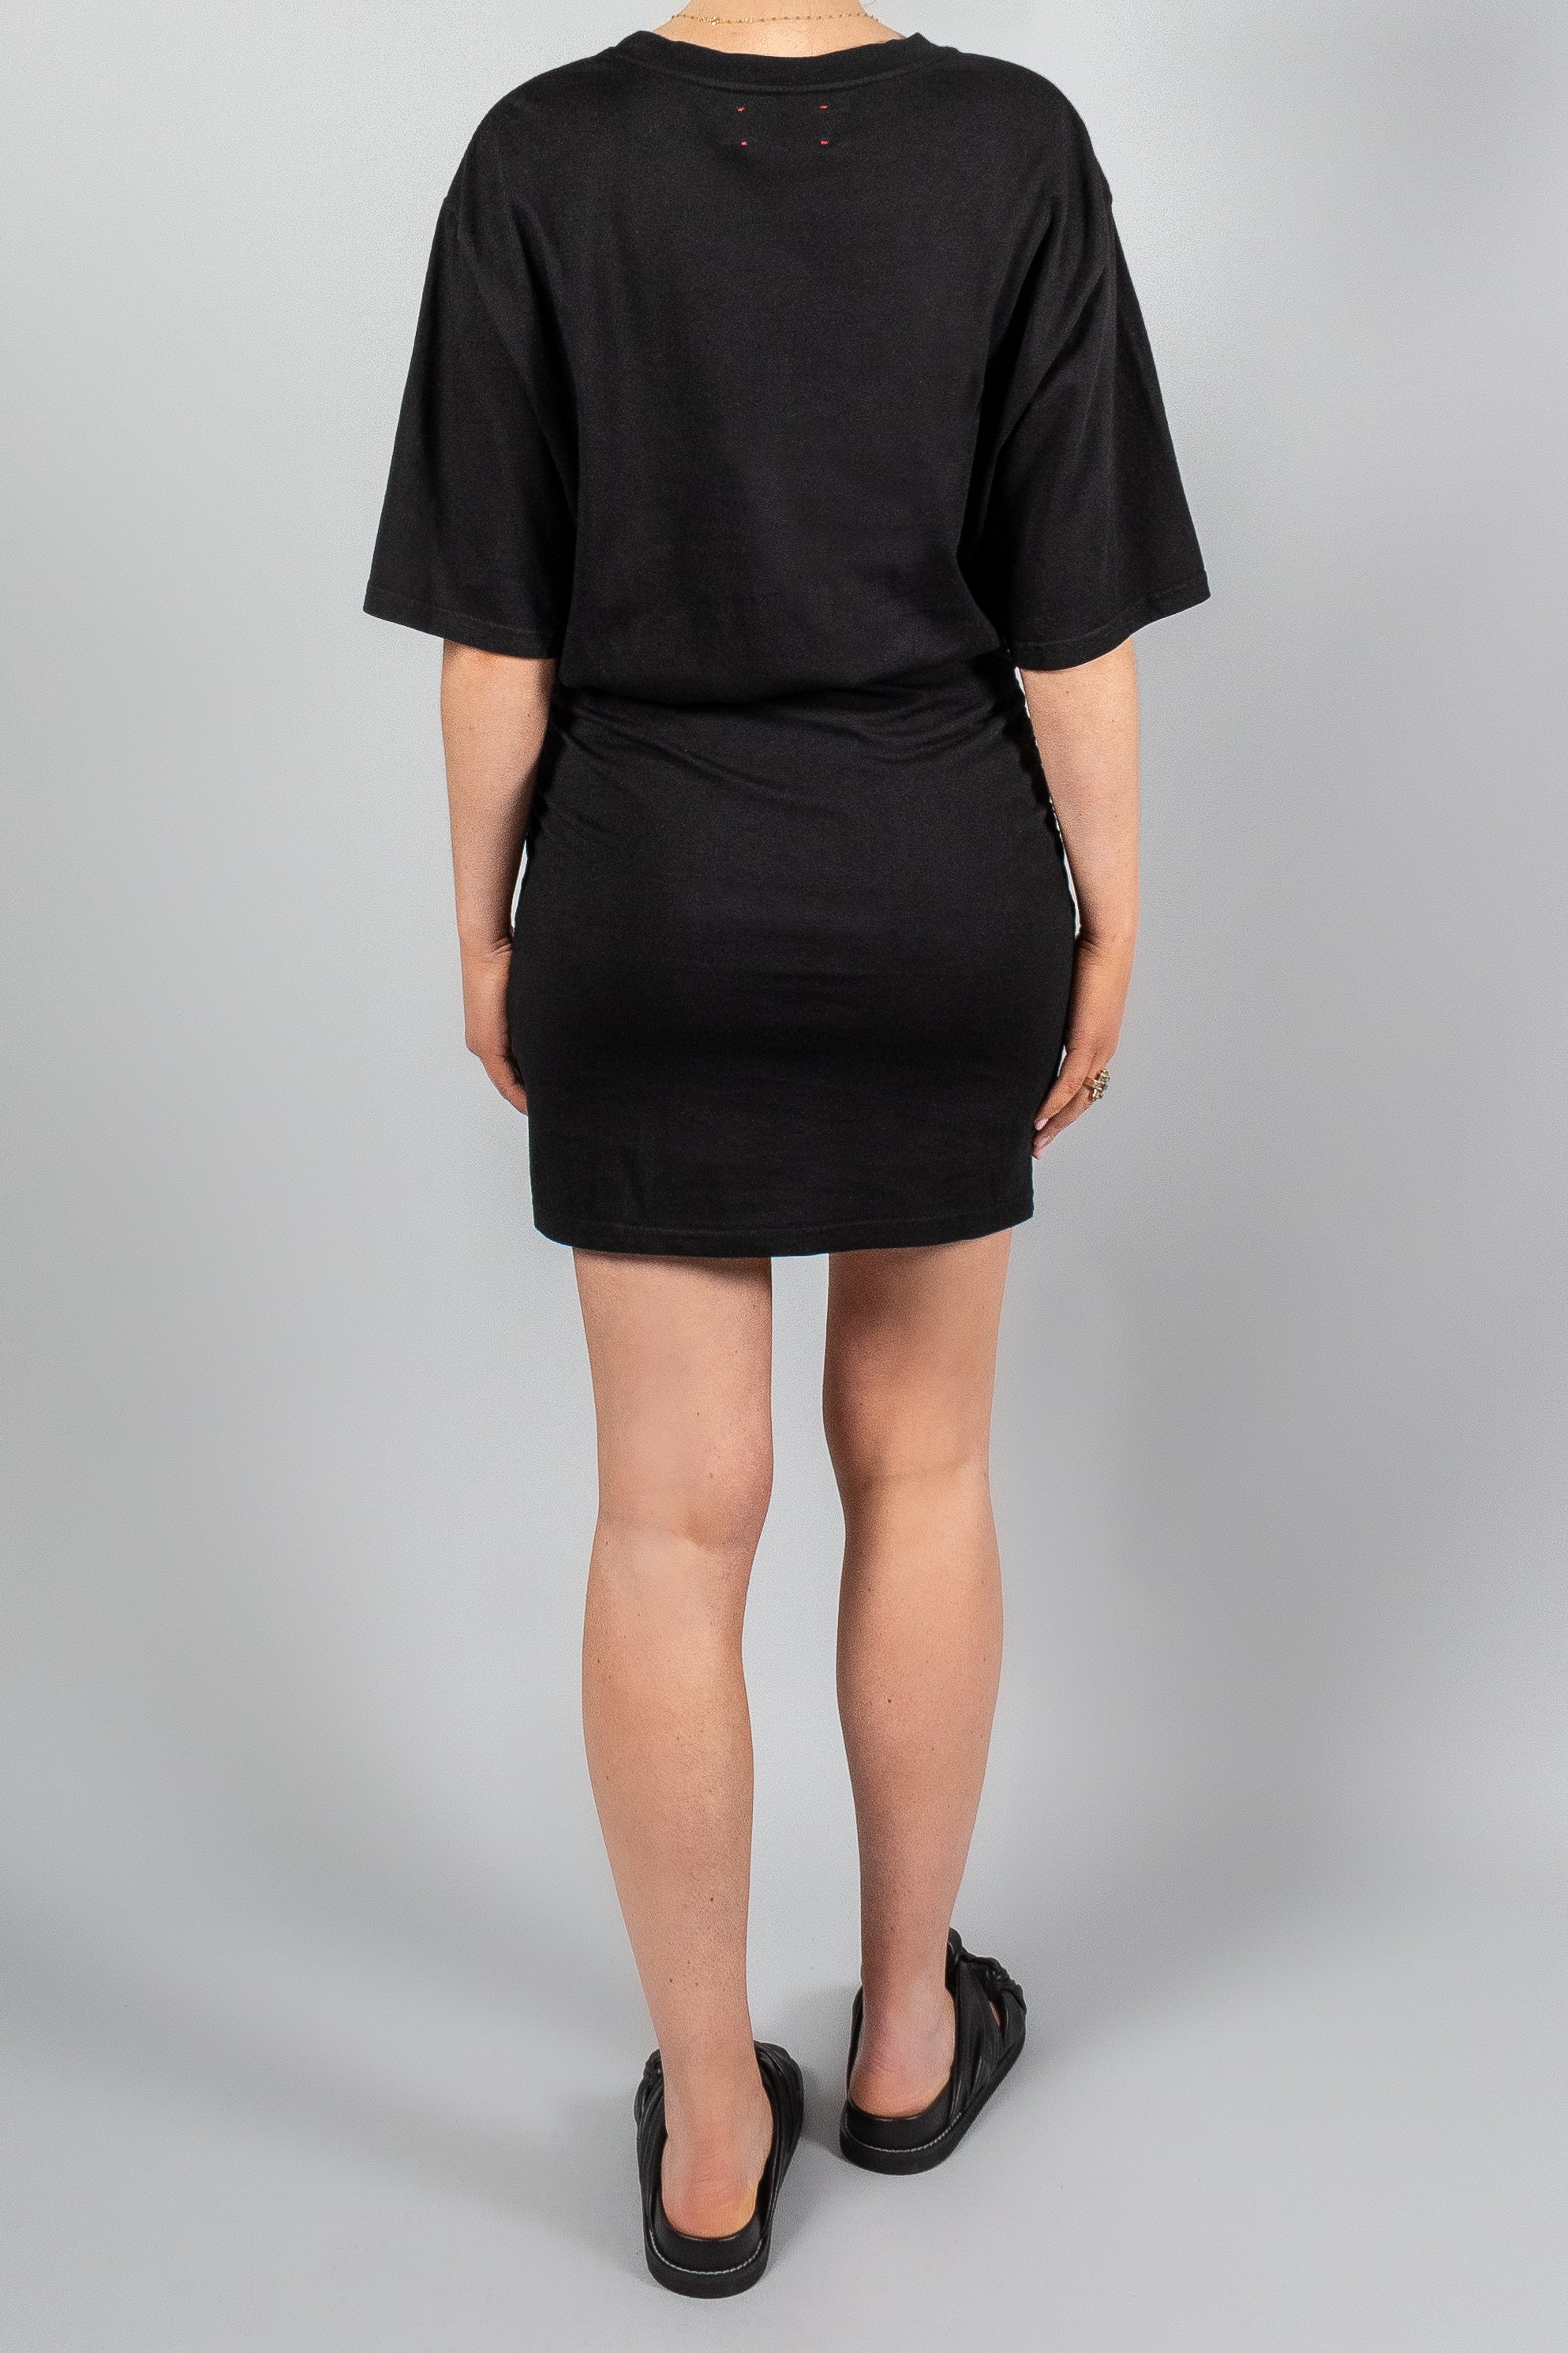 Xirena Lexa Dress-Dresses and Jumpsuits-Misch-Boutique-Vancouver-Canada-misch.ca